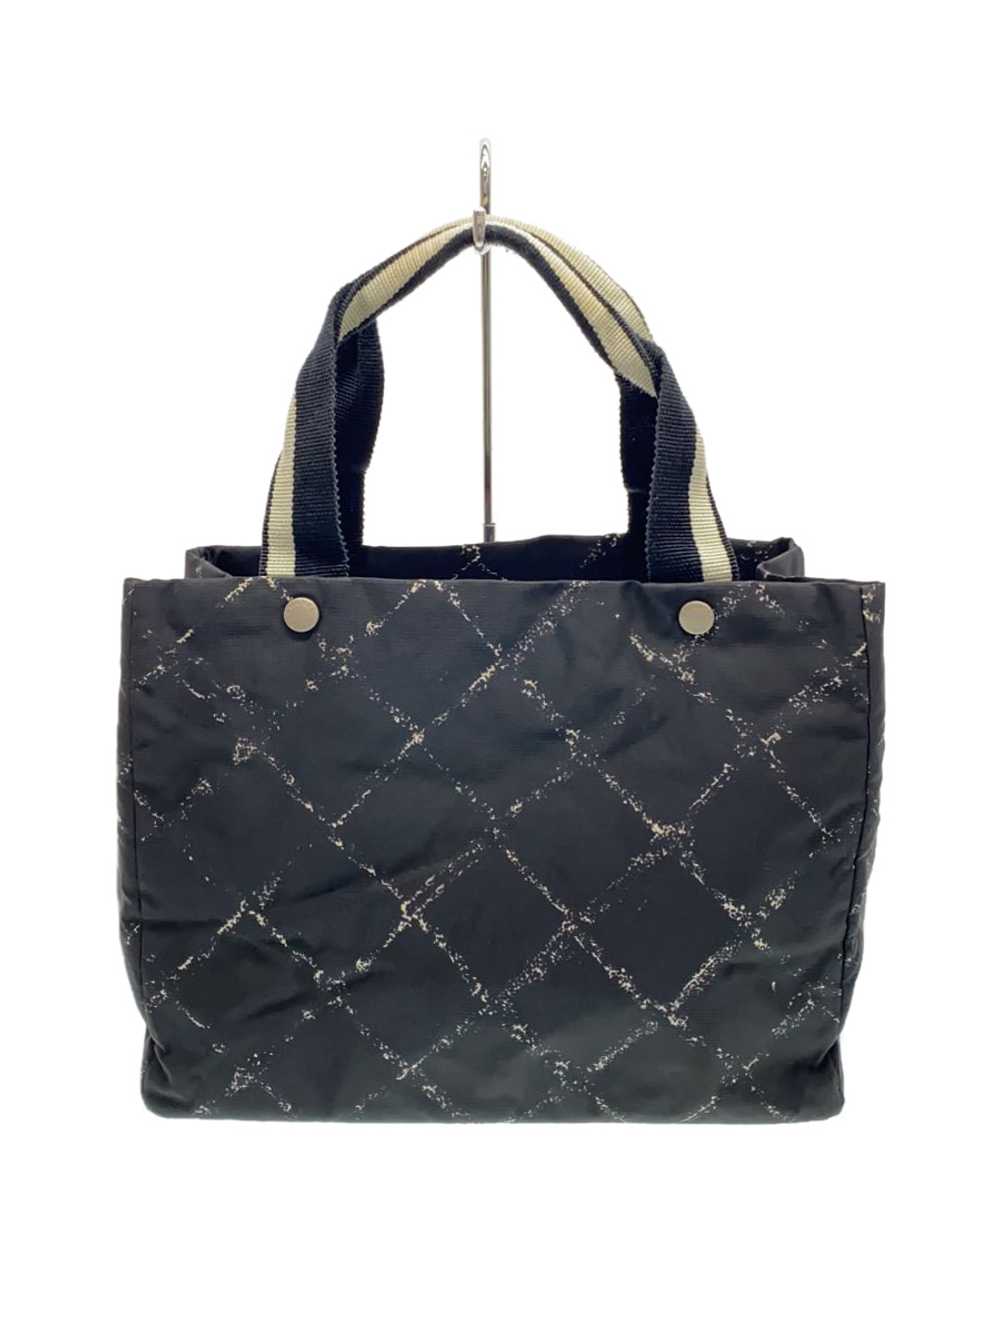 Used Chanel Travel Line/Tote Bag/Nylon/Black Bag - image 1